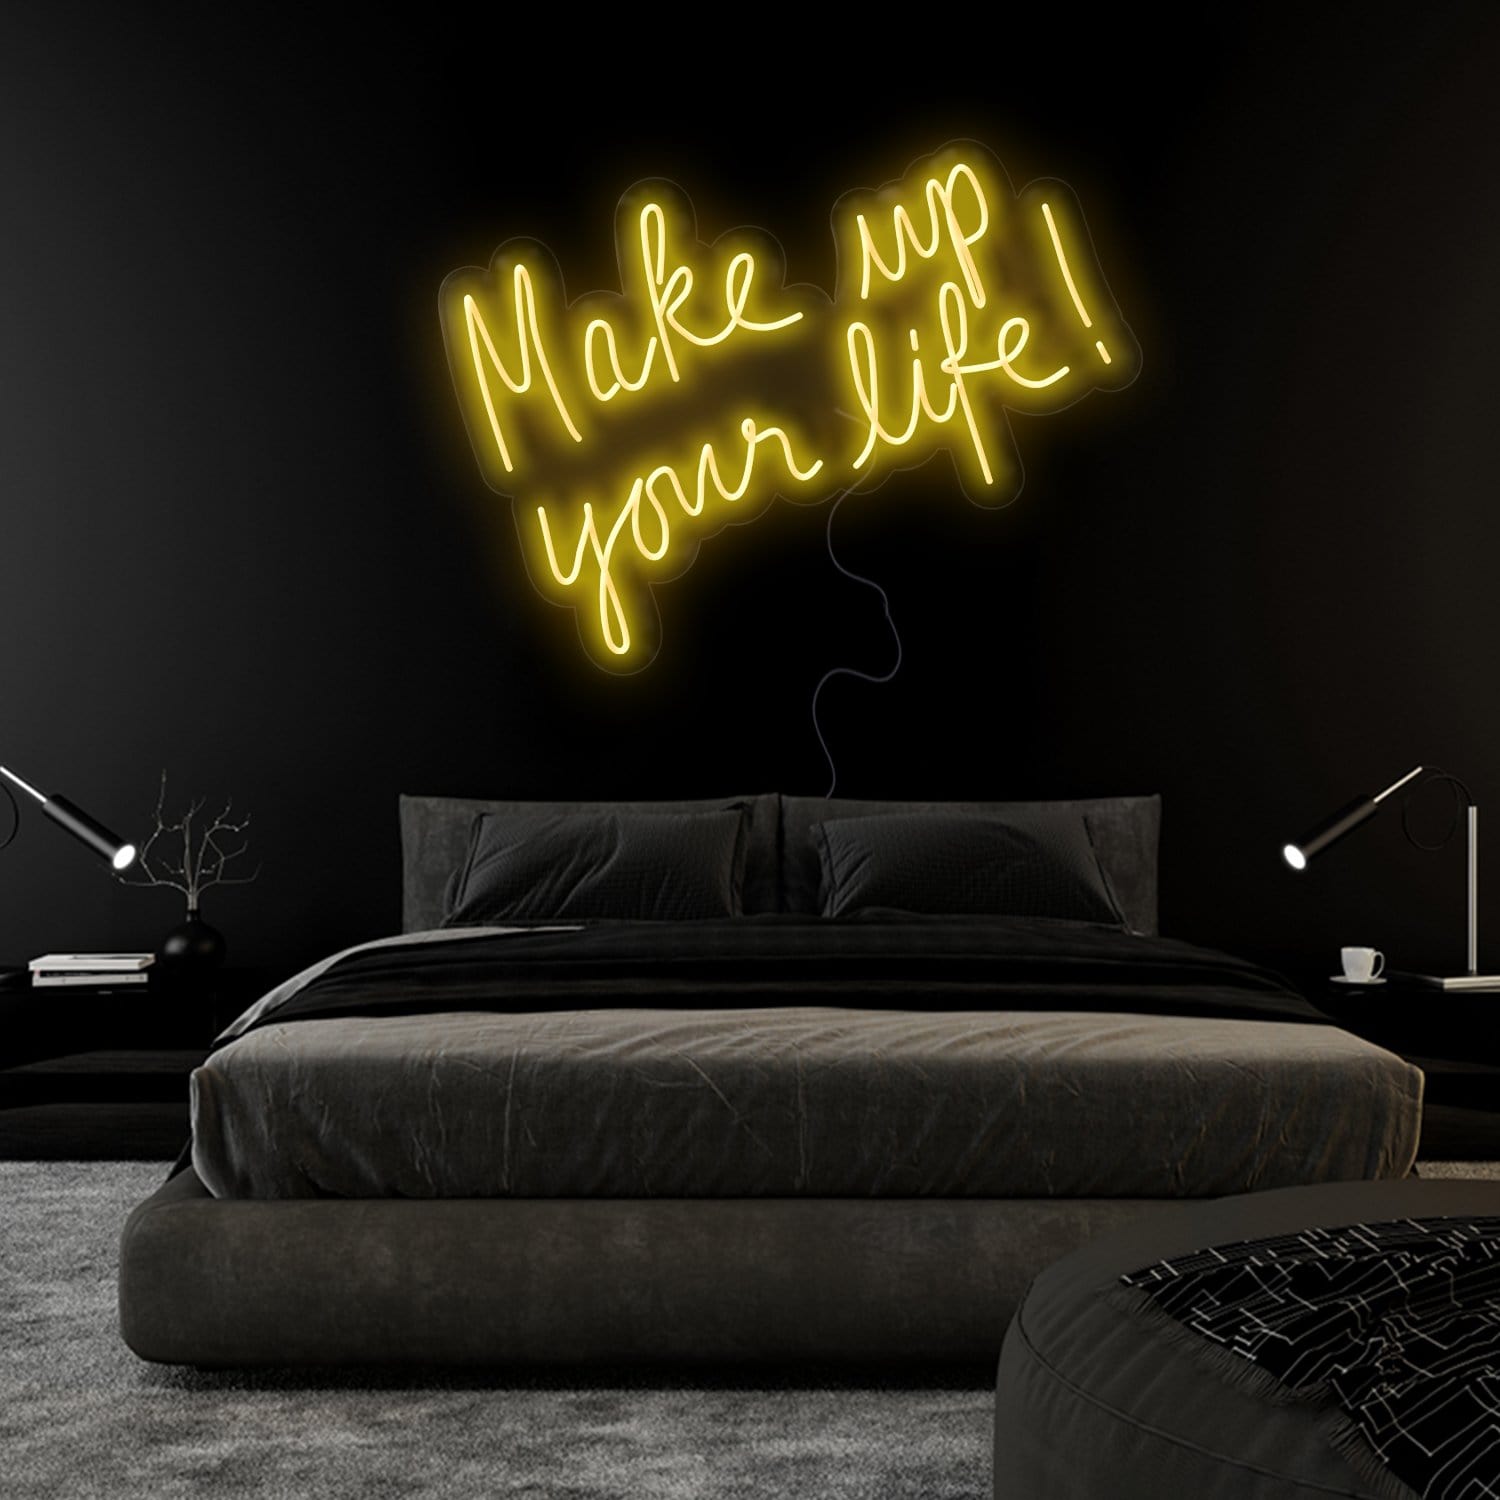 "Make Up Your Life" LED Neonschild Sign Schriftzug - NEONEVERGLOW